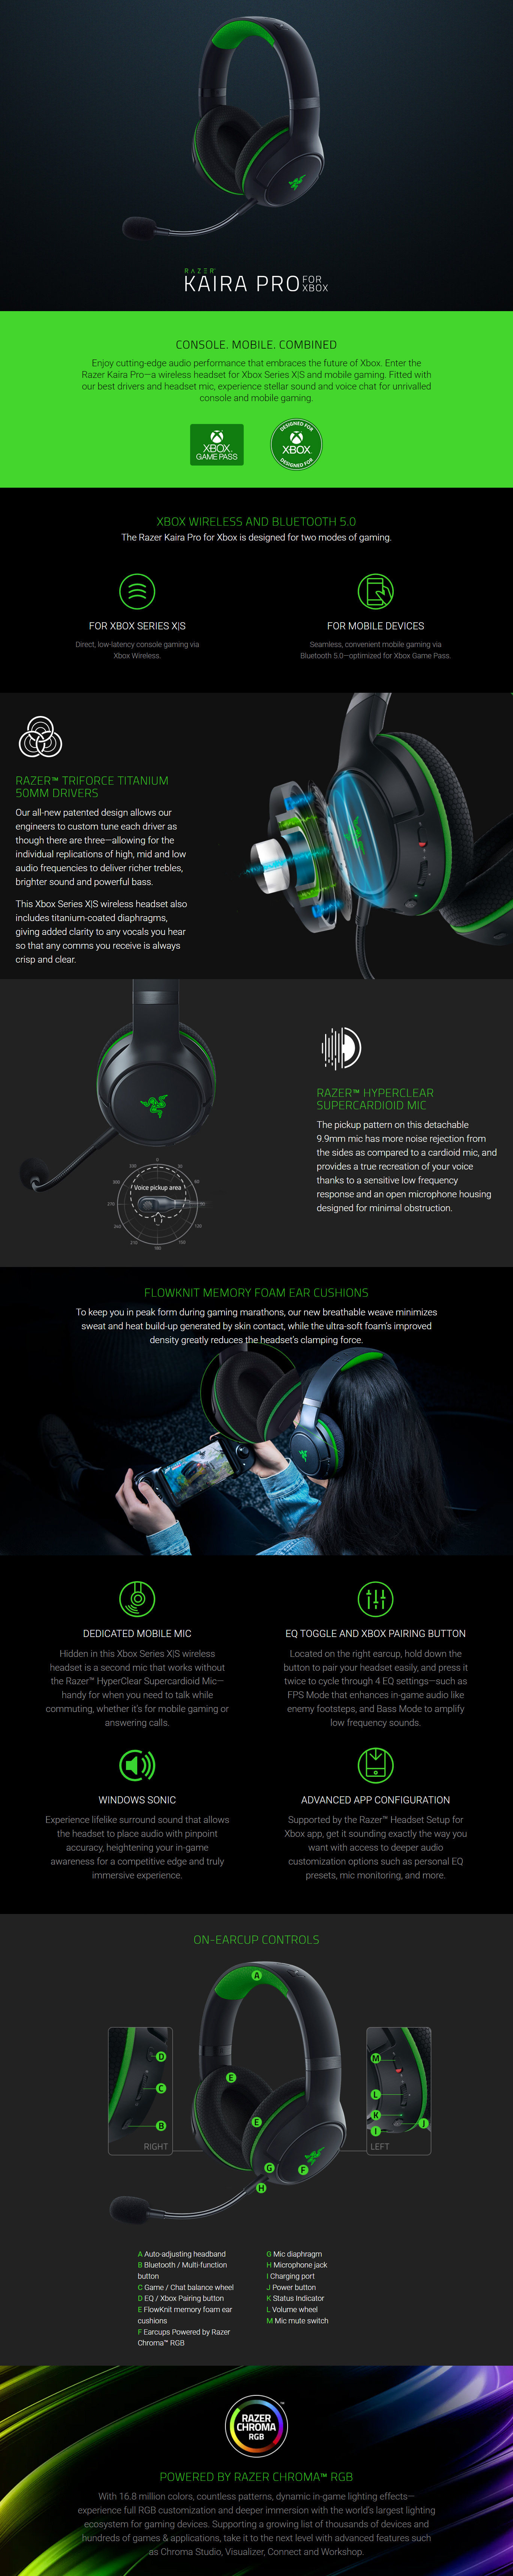 Headphones-Razer-Kaira-Pro-Wireless-Gaming-Headset-for-Xbox-Series-X-RZ04-03470100-R3M1-1